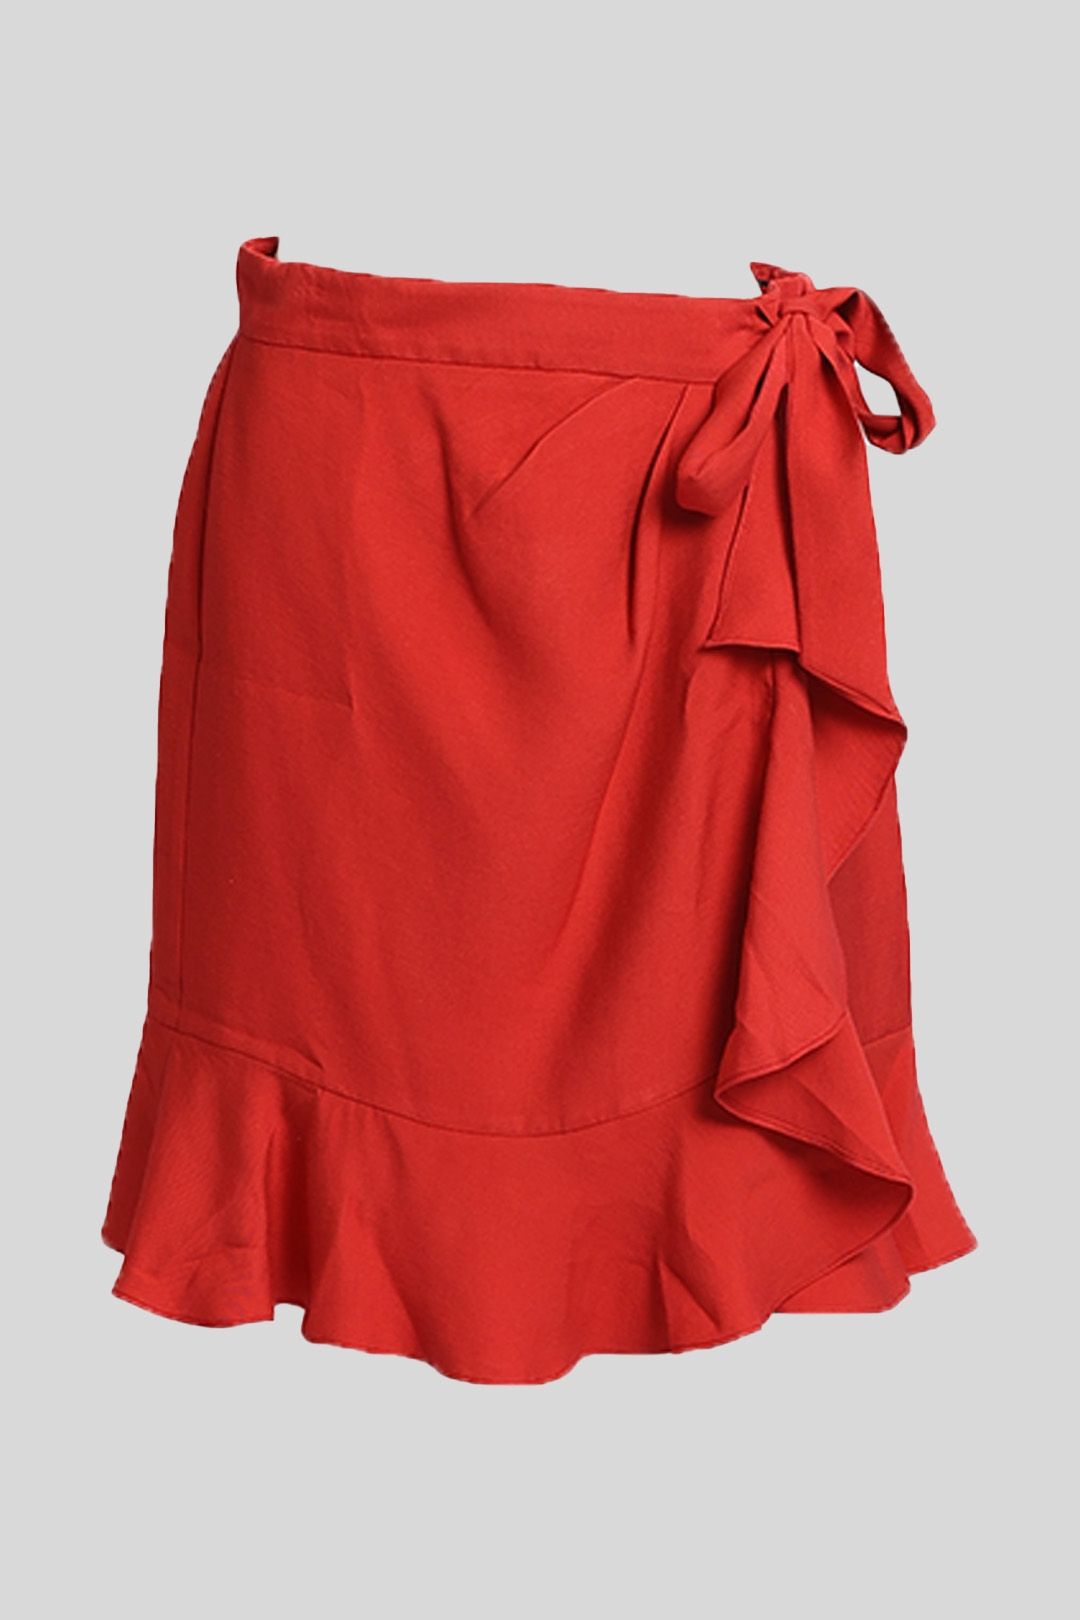 Cue - Red Ruffle Trim Wrap Skirt